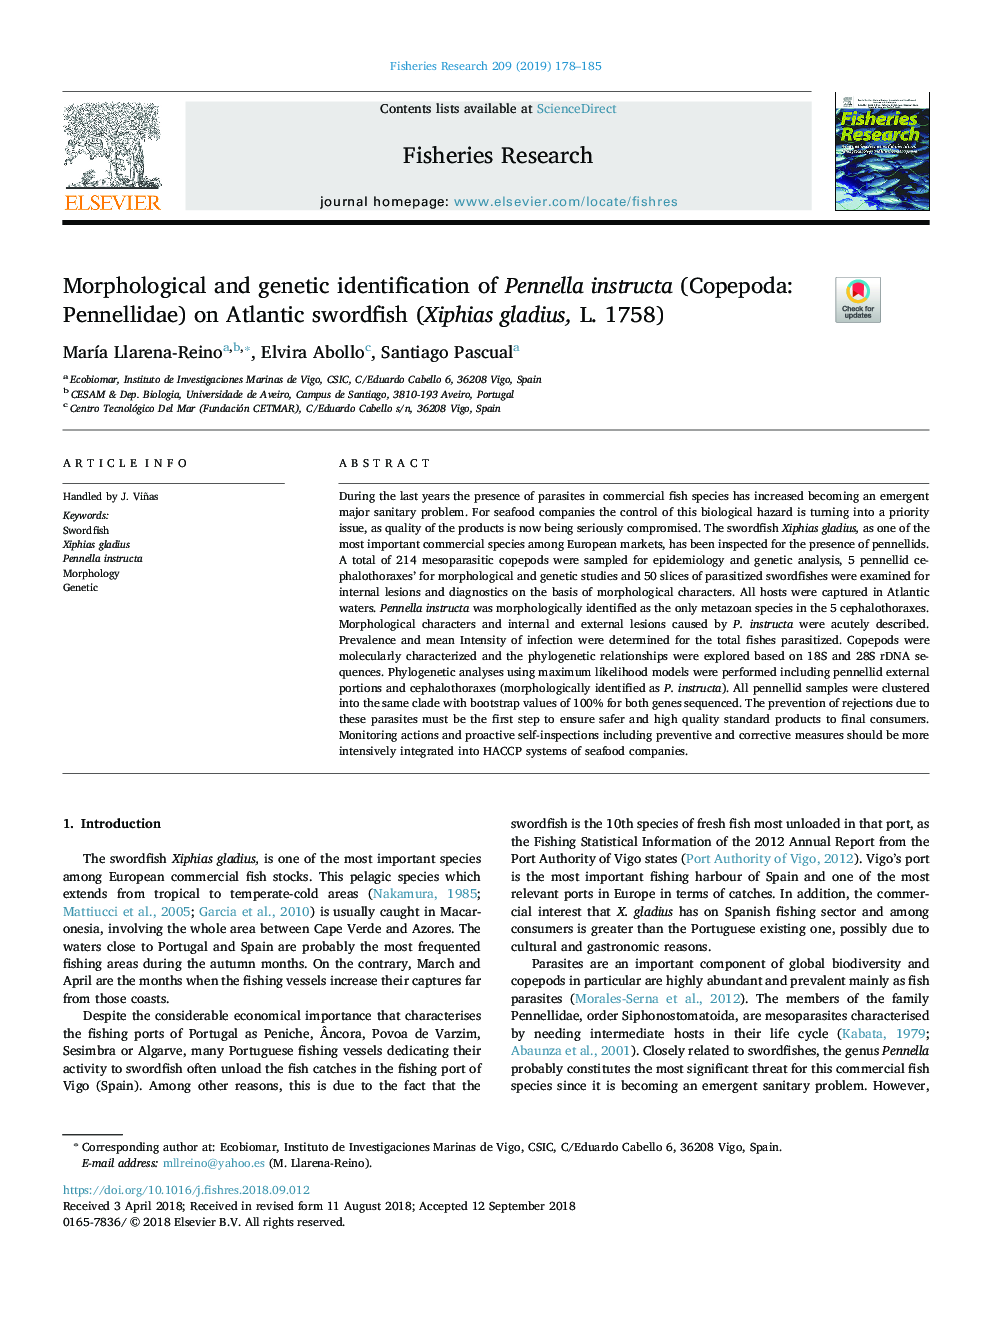 Morphological and genetic identification of Pennella instructa (Copepoda: Pennellidae) on Atlantic swordfish (Xiphias gladius, L. 1758)